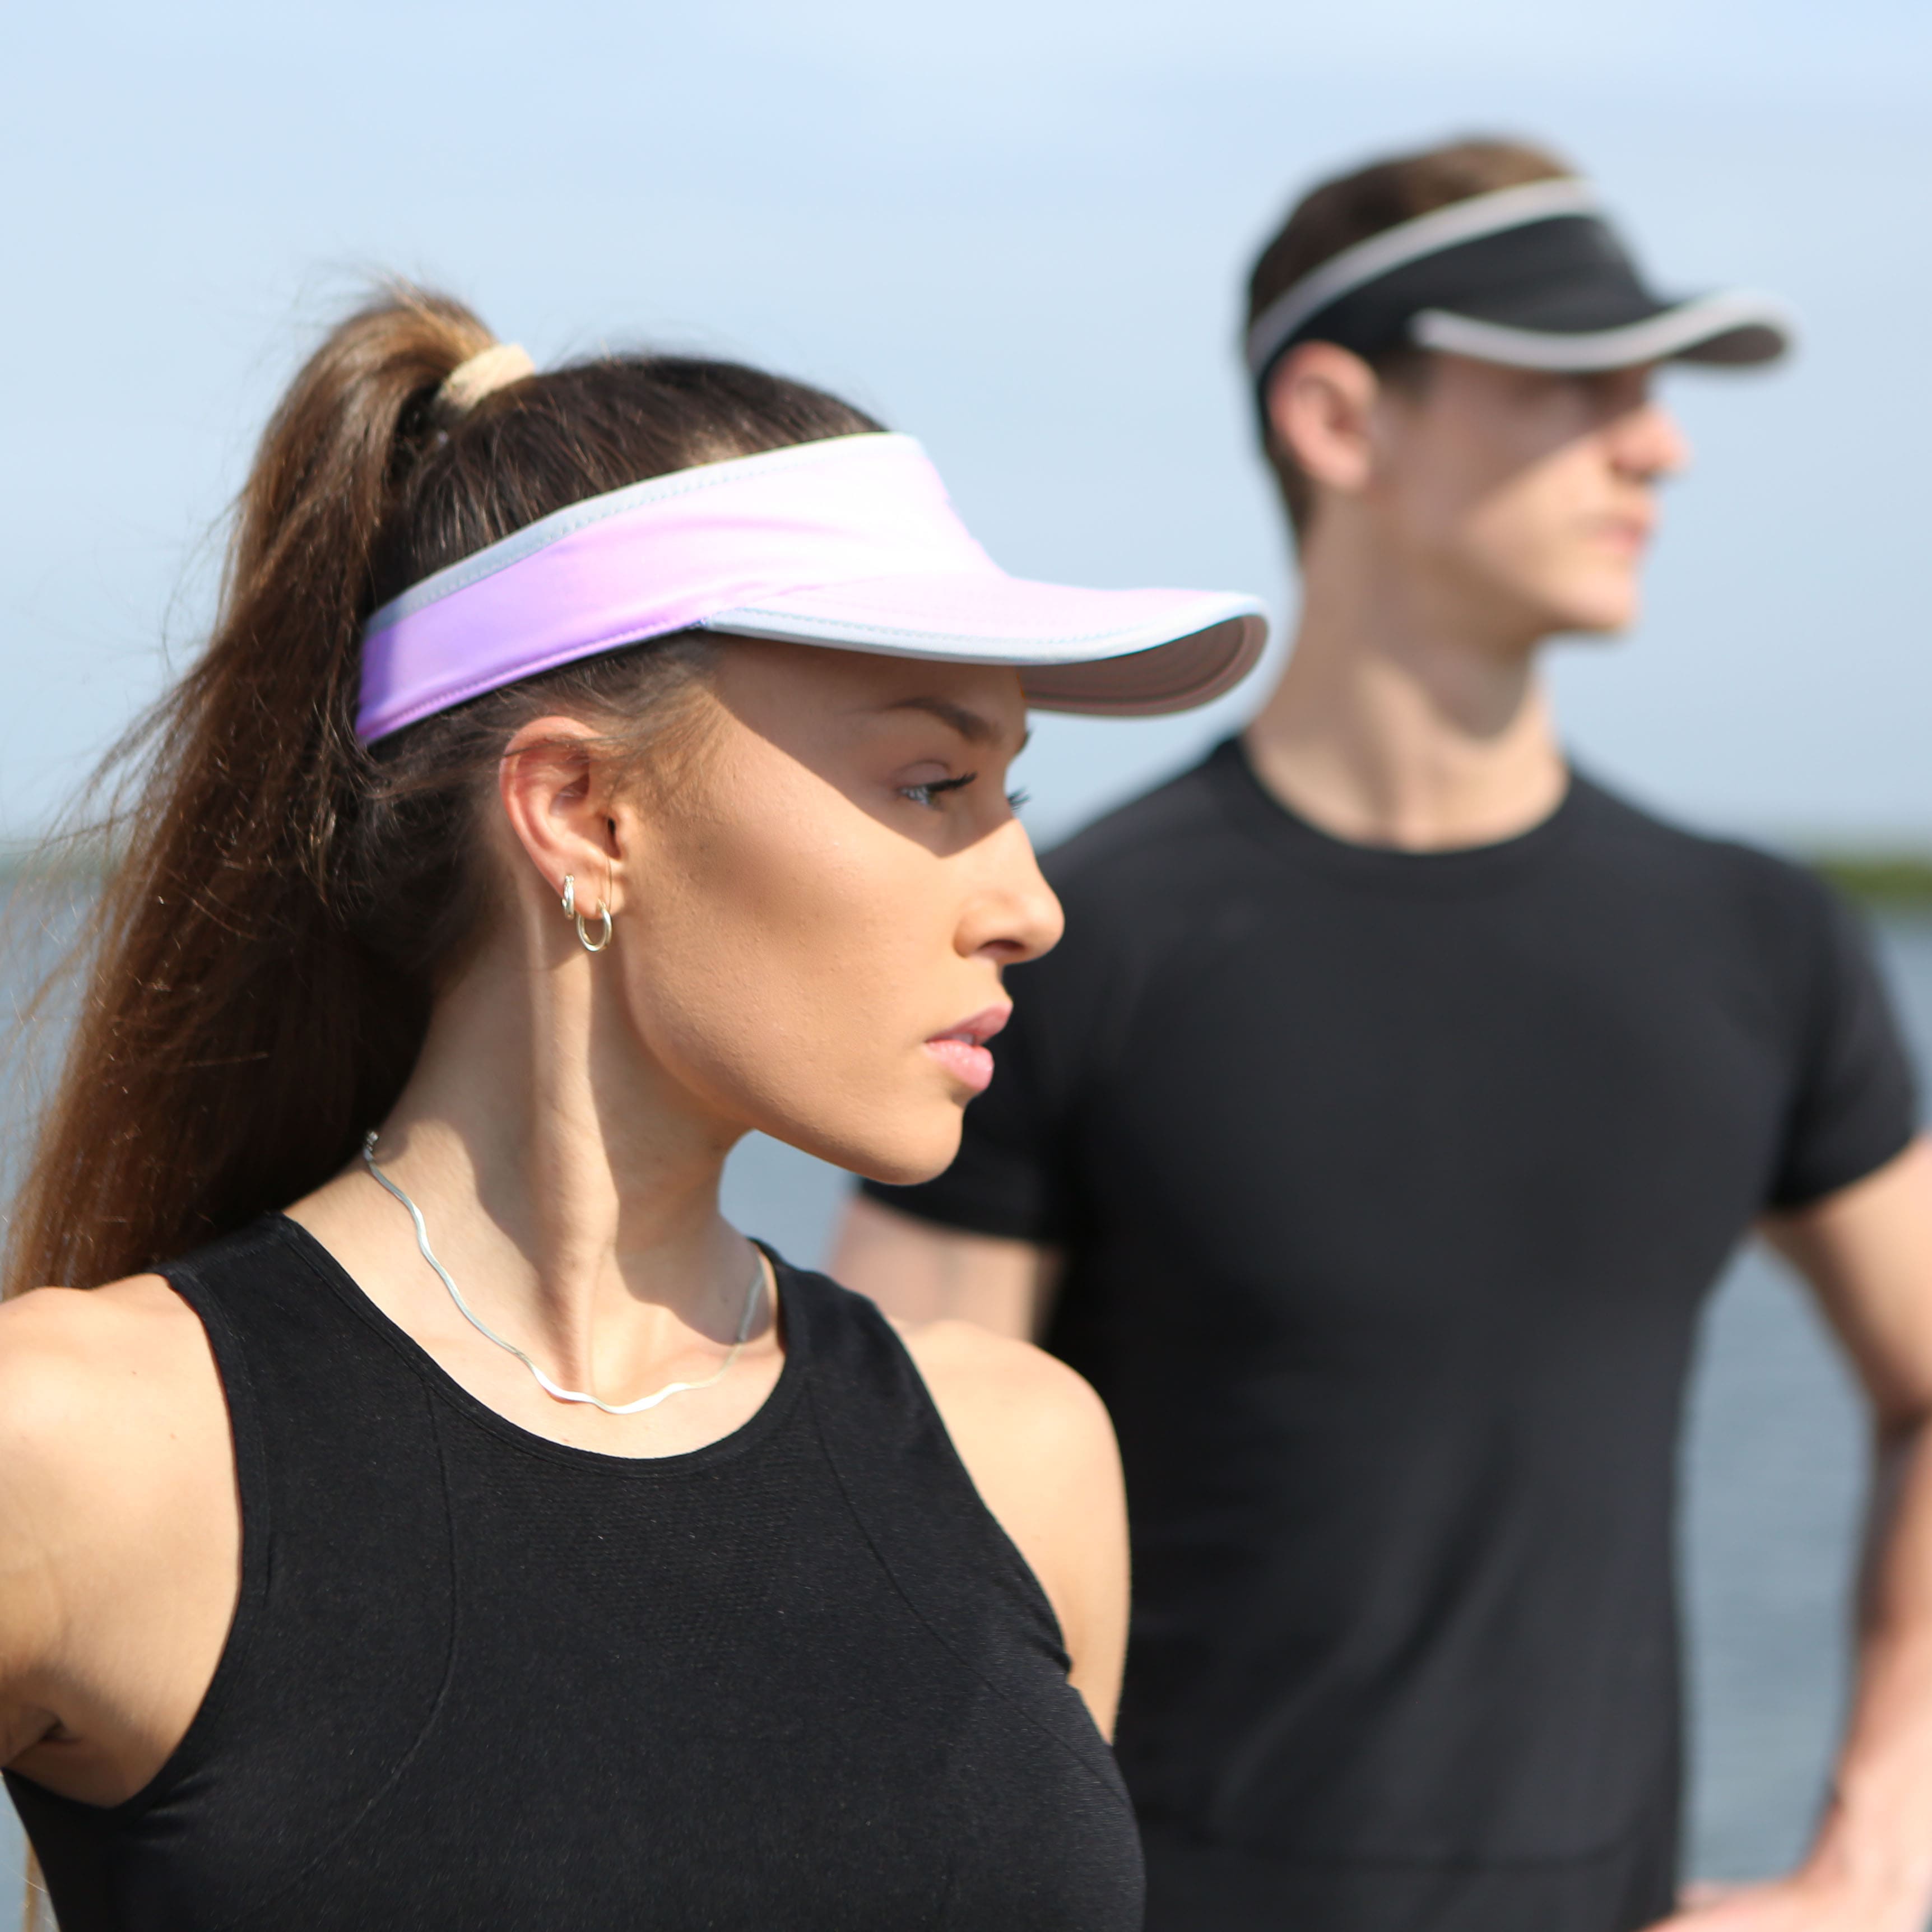 Men and women wearing a visor while running.